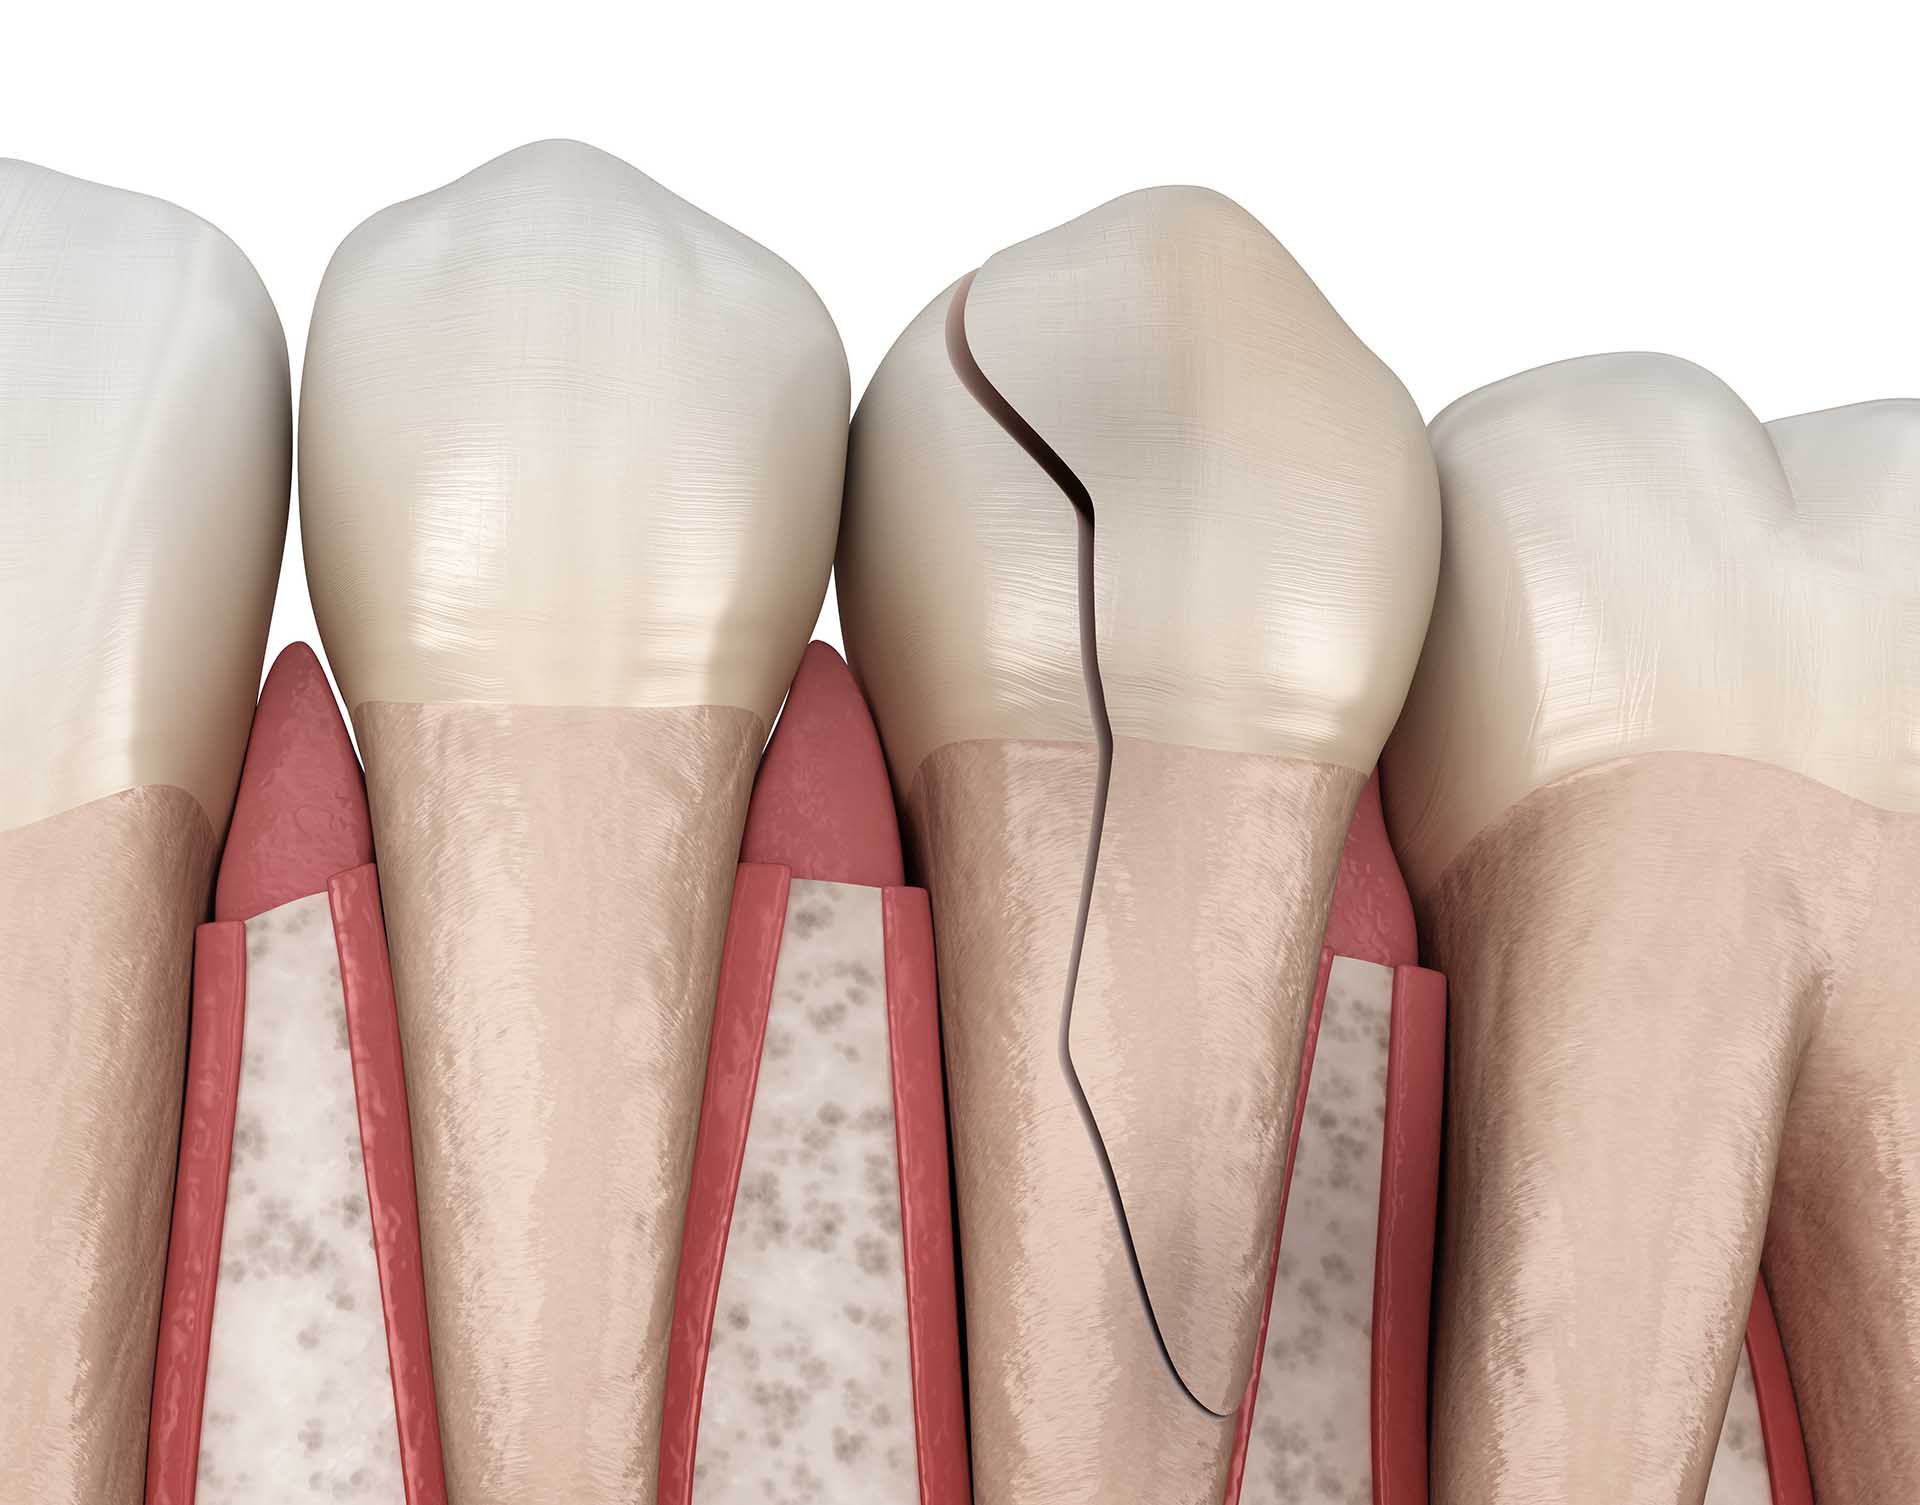 Cracked tooth, splitted. Dental 3D illustration. Ivy Lane Dentistry offers emergency care for broken teeth in San Antonio, TX.